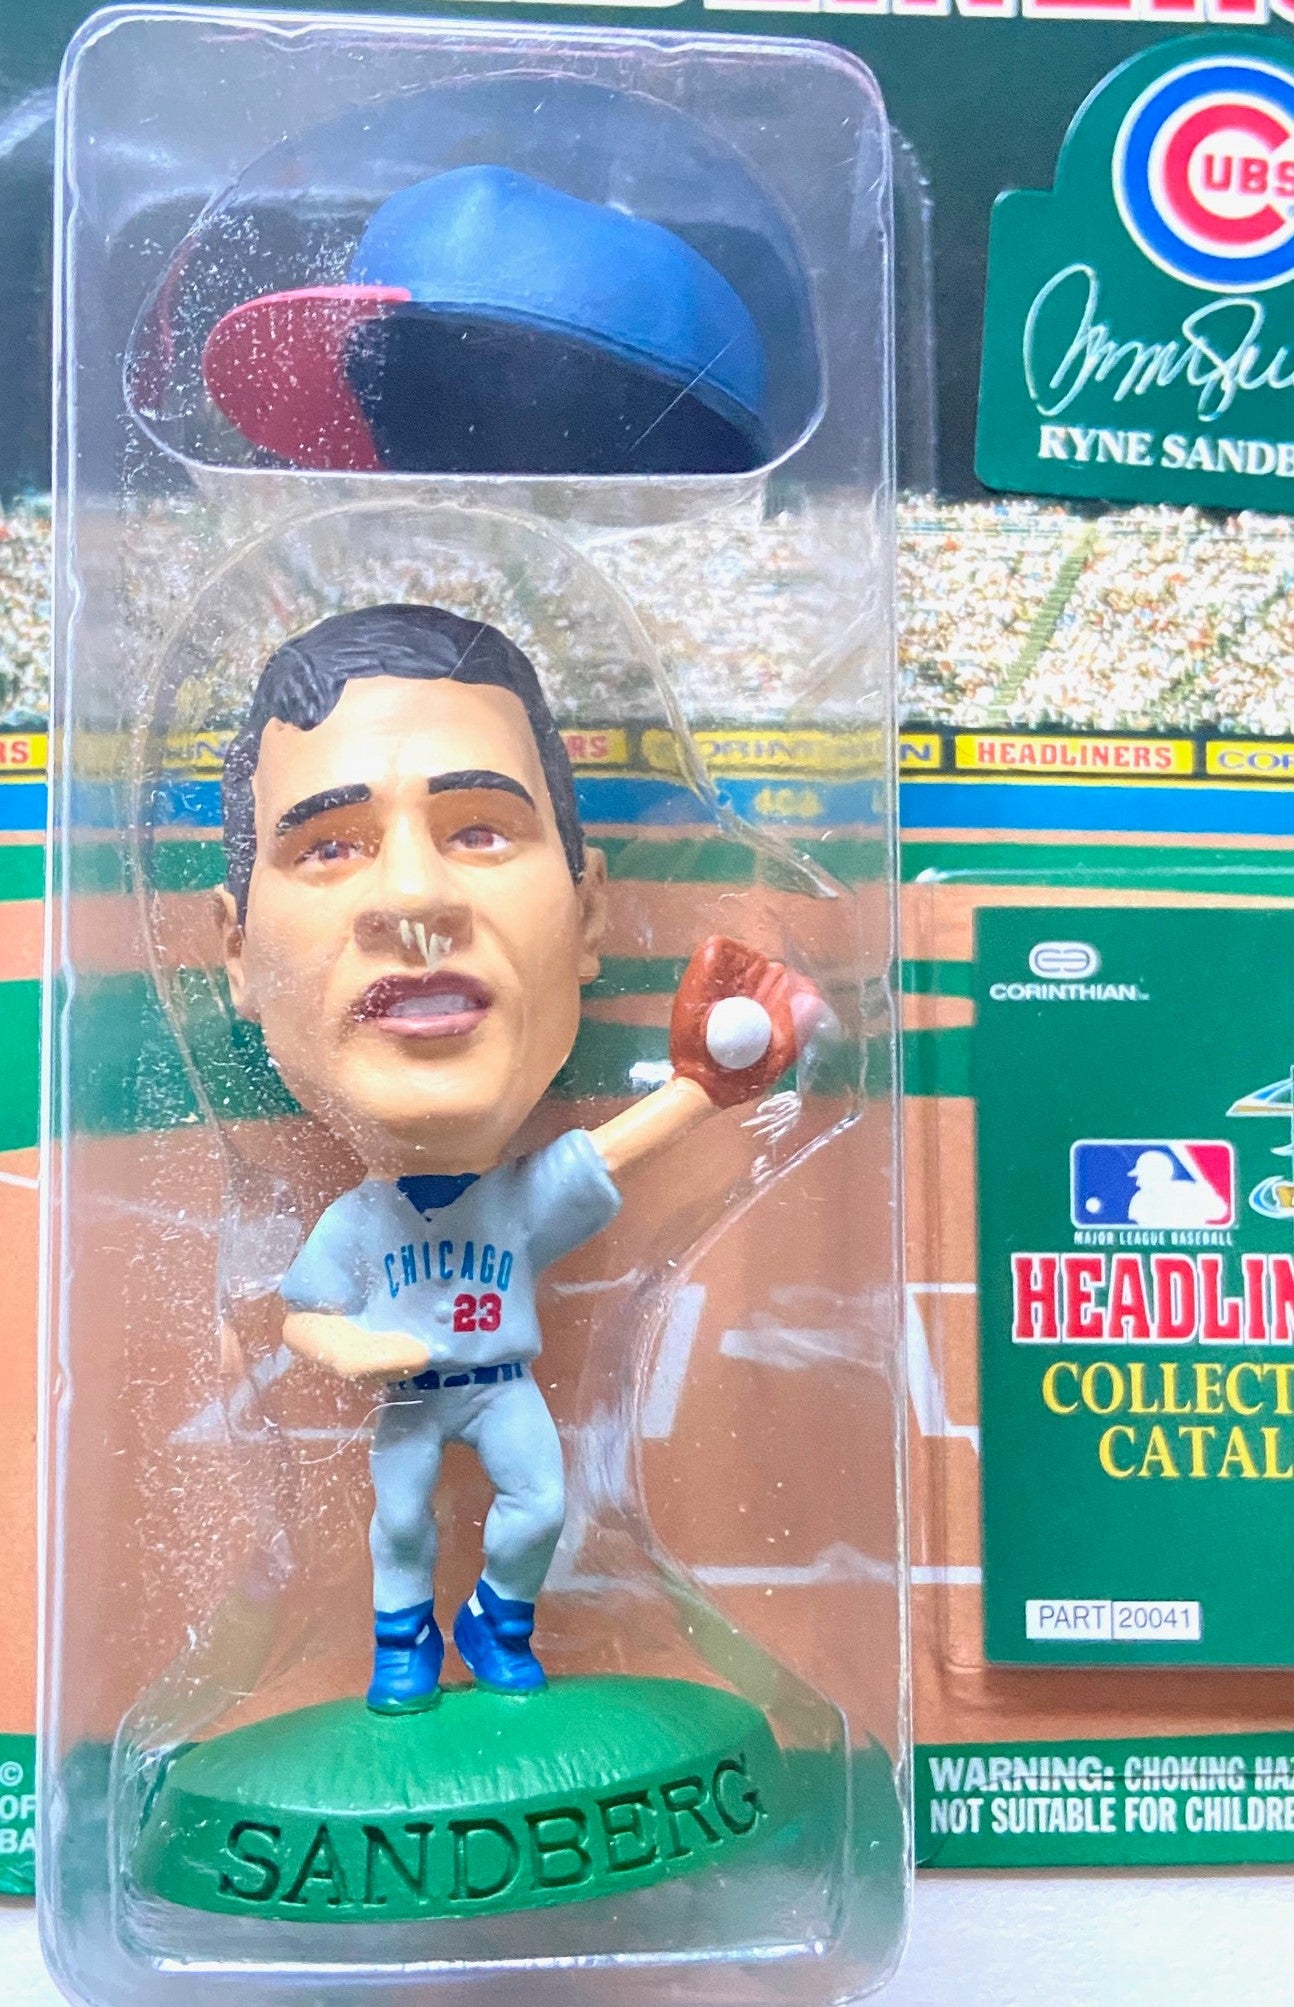 Ryne Sandberg 1996 MLB Chicago Cubs Headliner Figurine by Corinthian